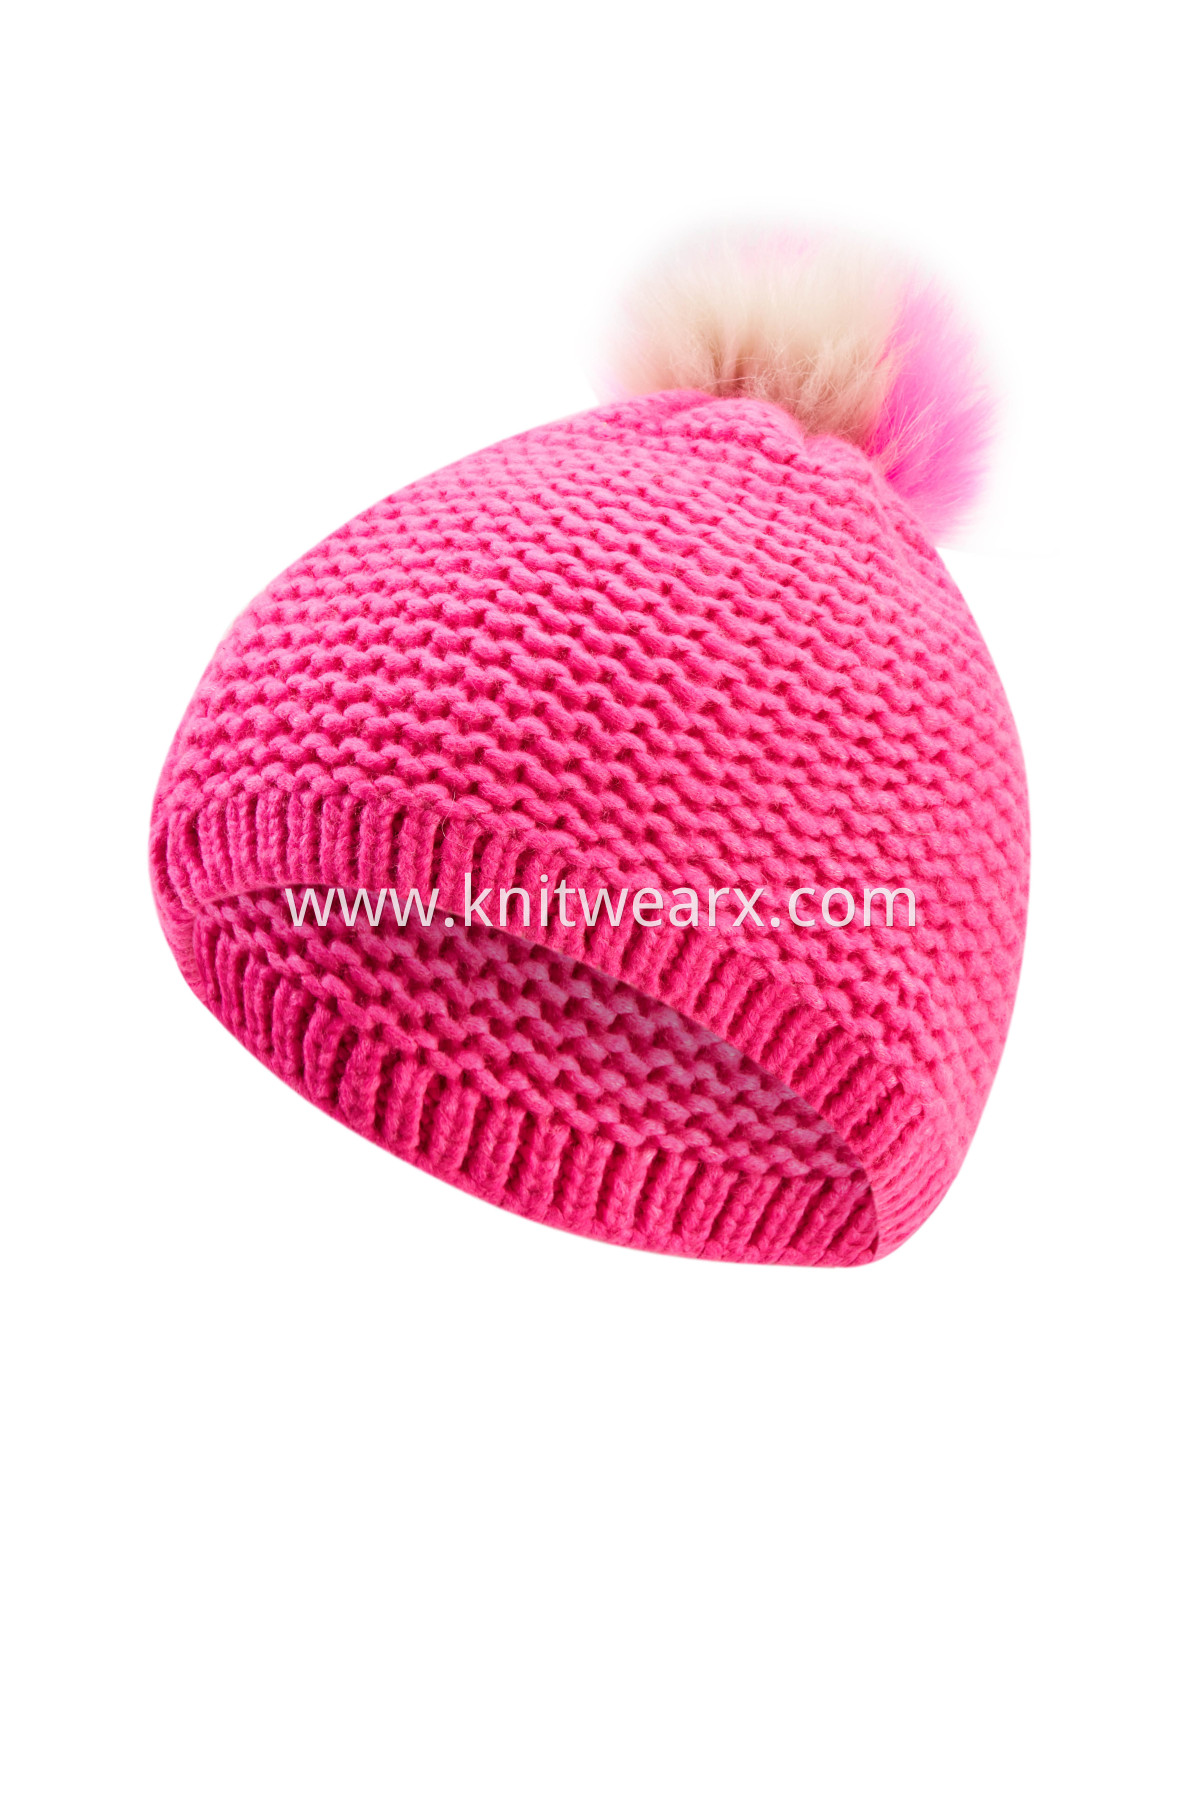 Girls' Beautiful Beanie Child Winter Knit Cap